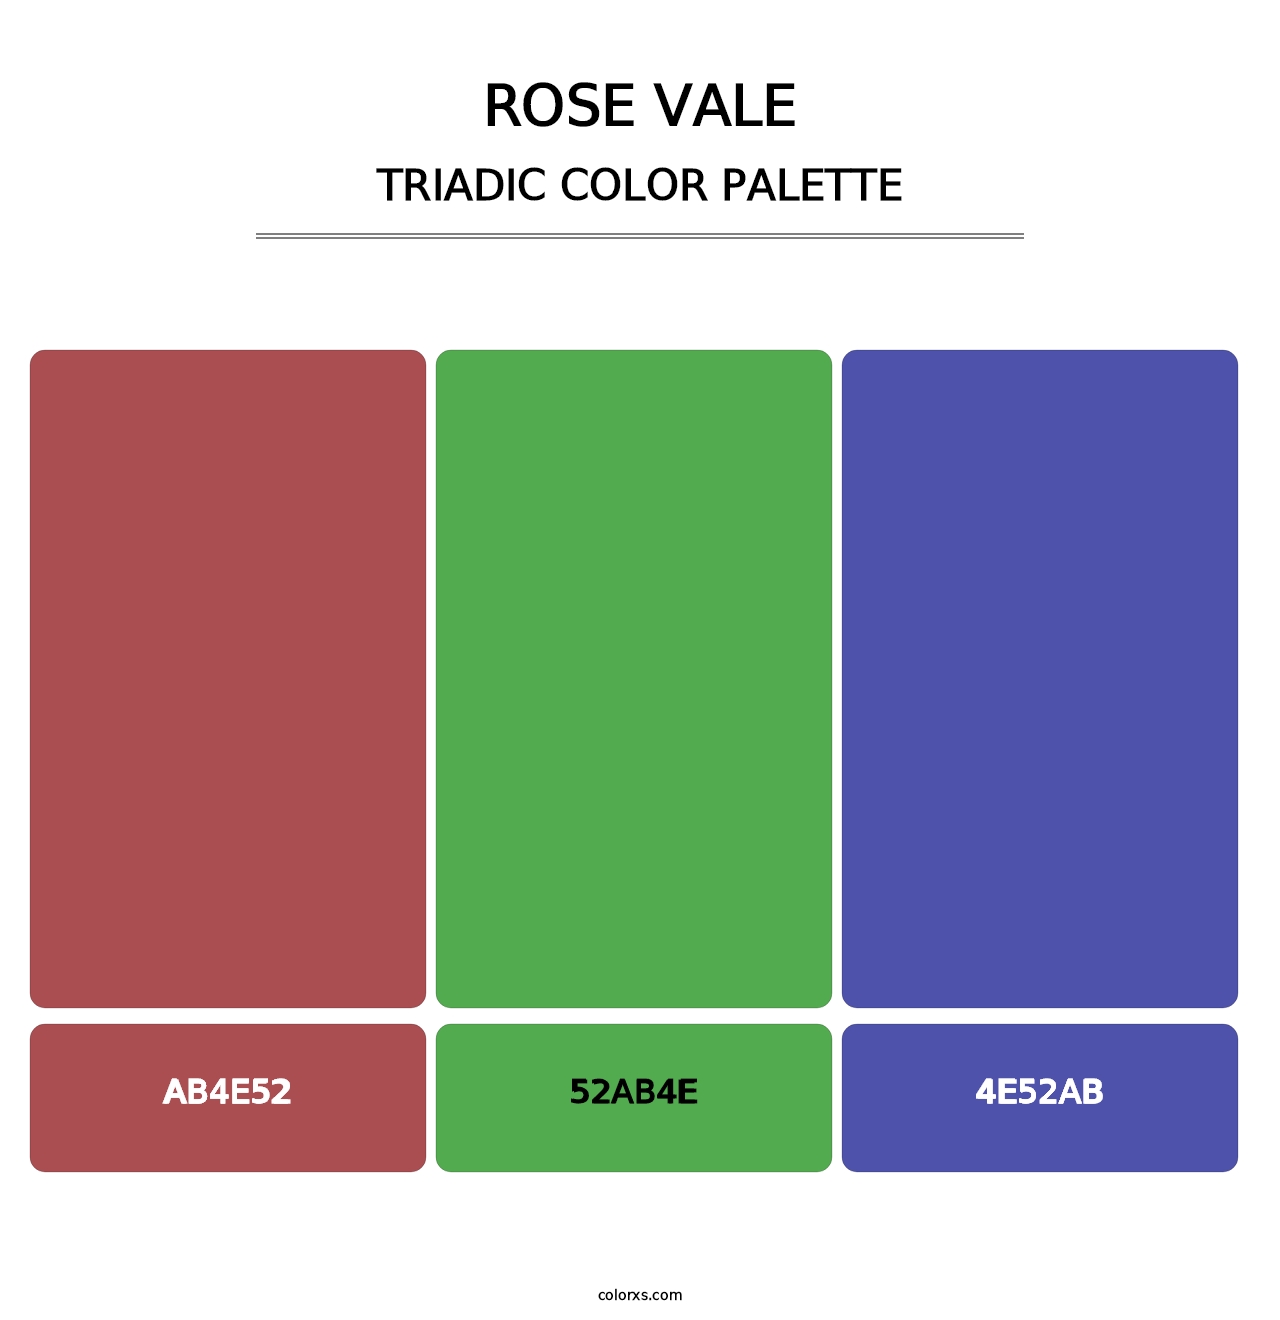 Rose Vale - Triadic Color Palette